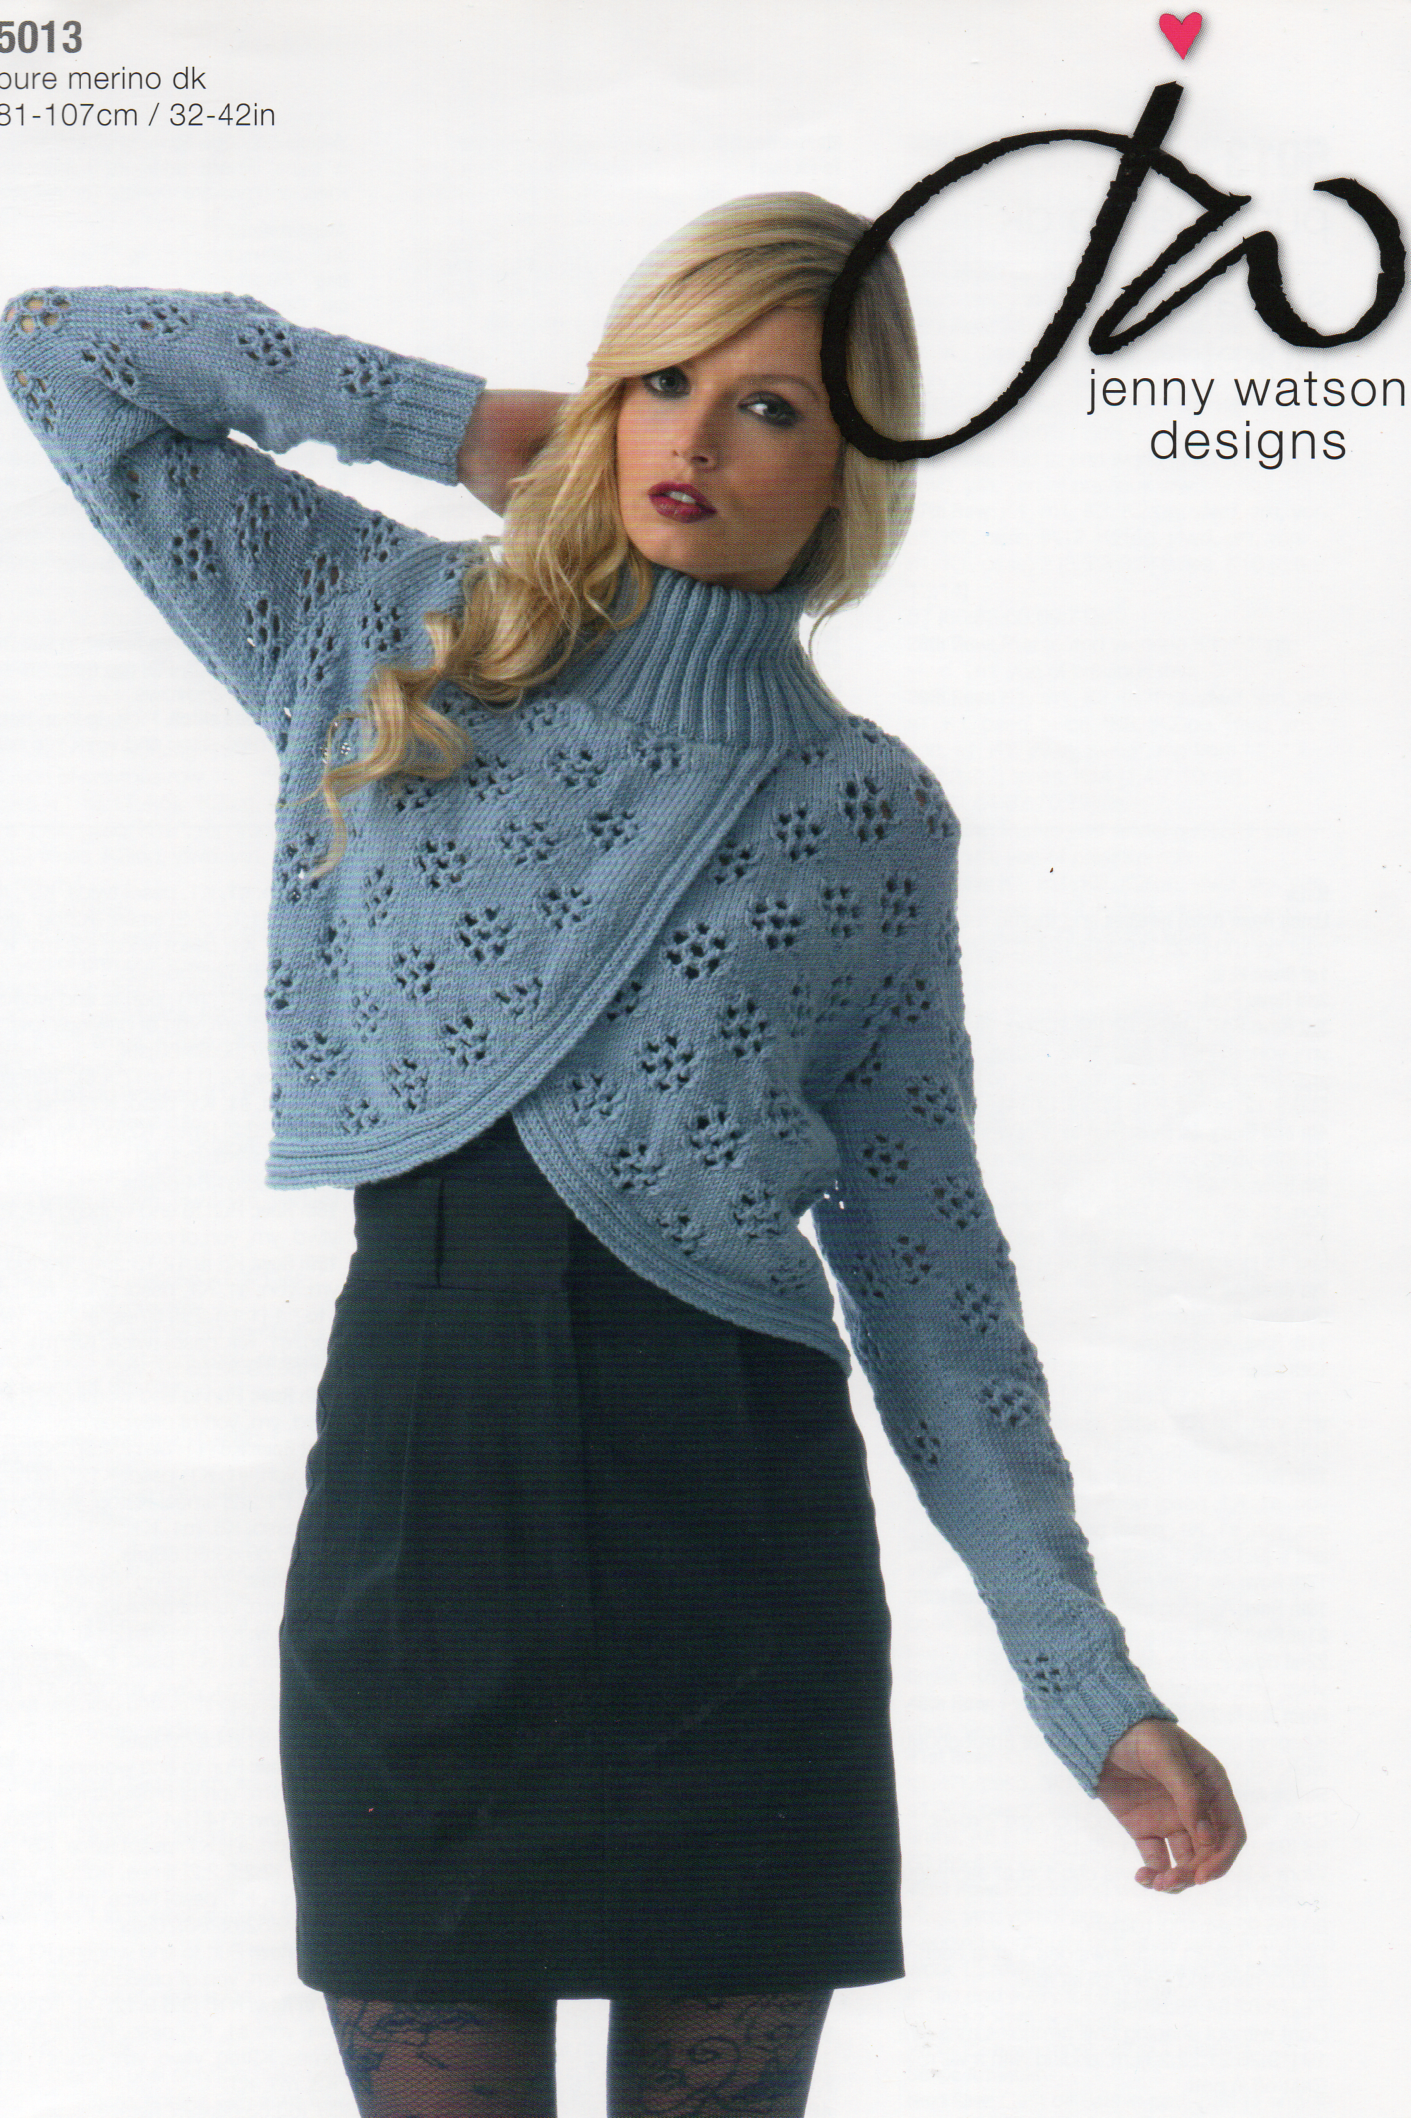  Knitting Pattern - Double Knit Funnel Neck Crossover Sweater by Jenny Watson Designs 5013